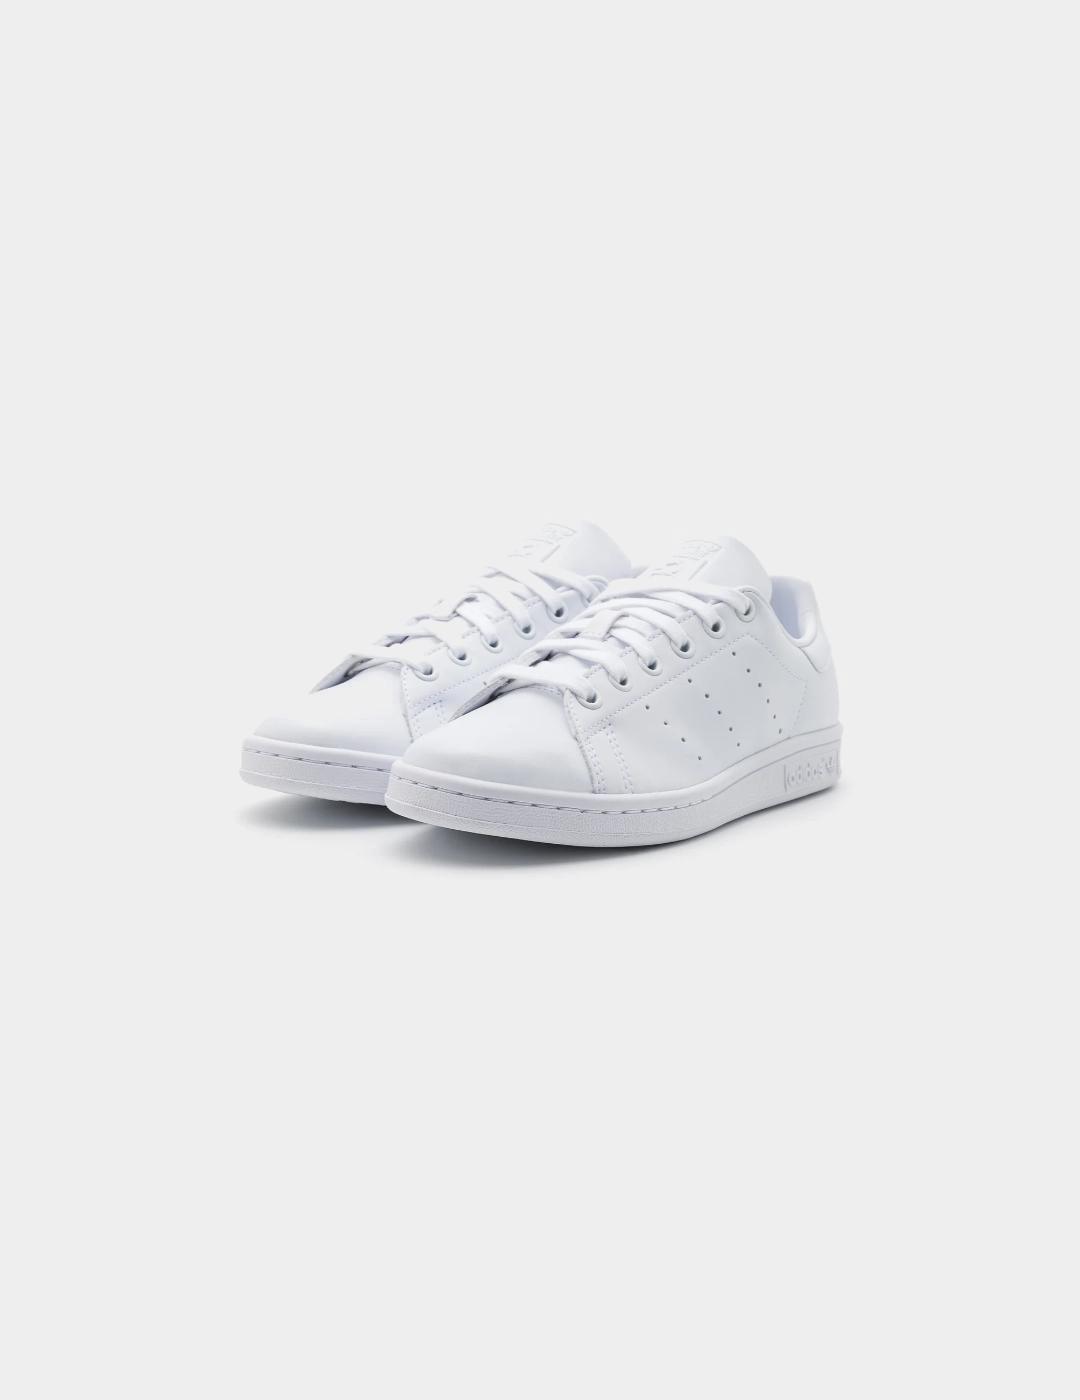 Adidas Stan smith clasicas blancas